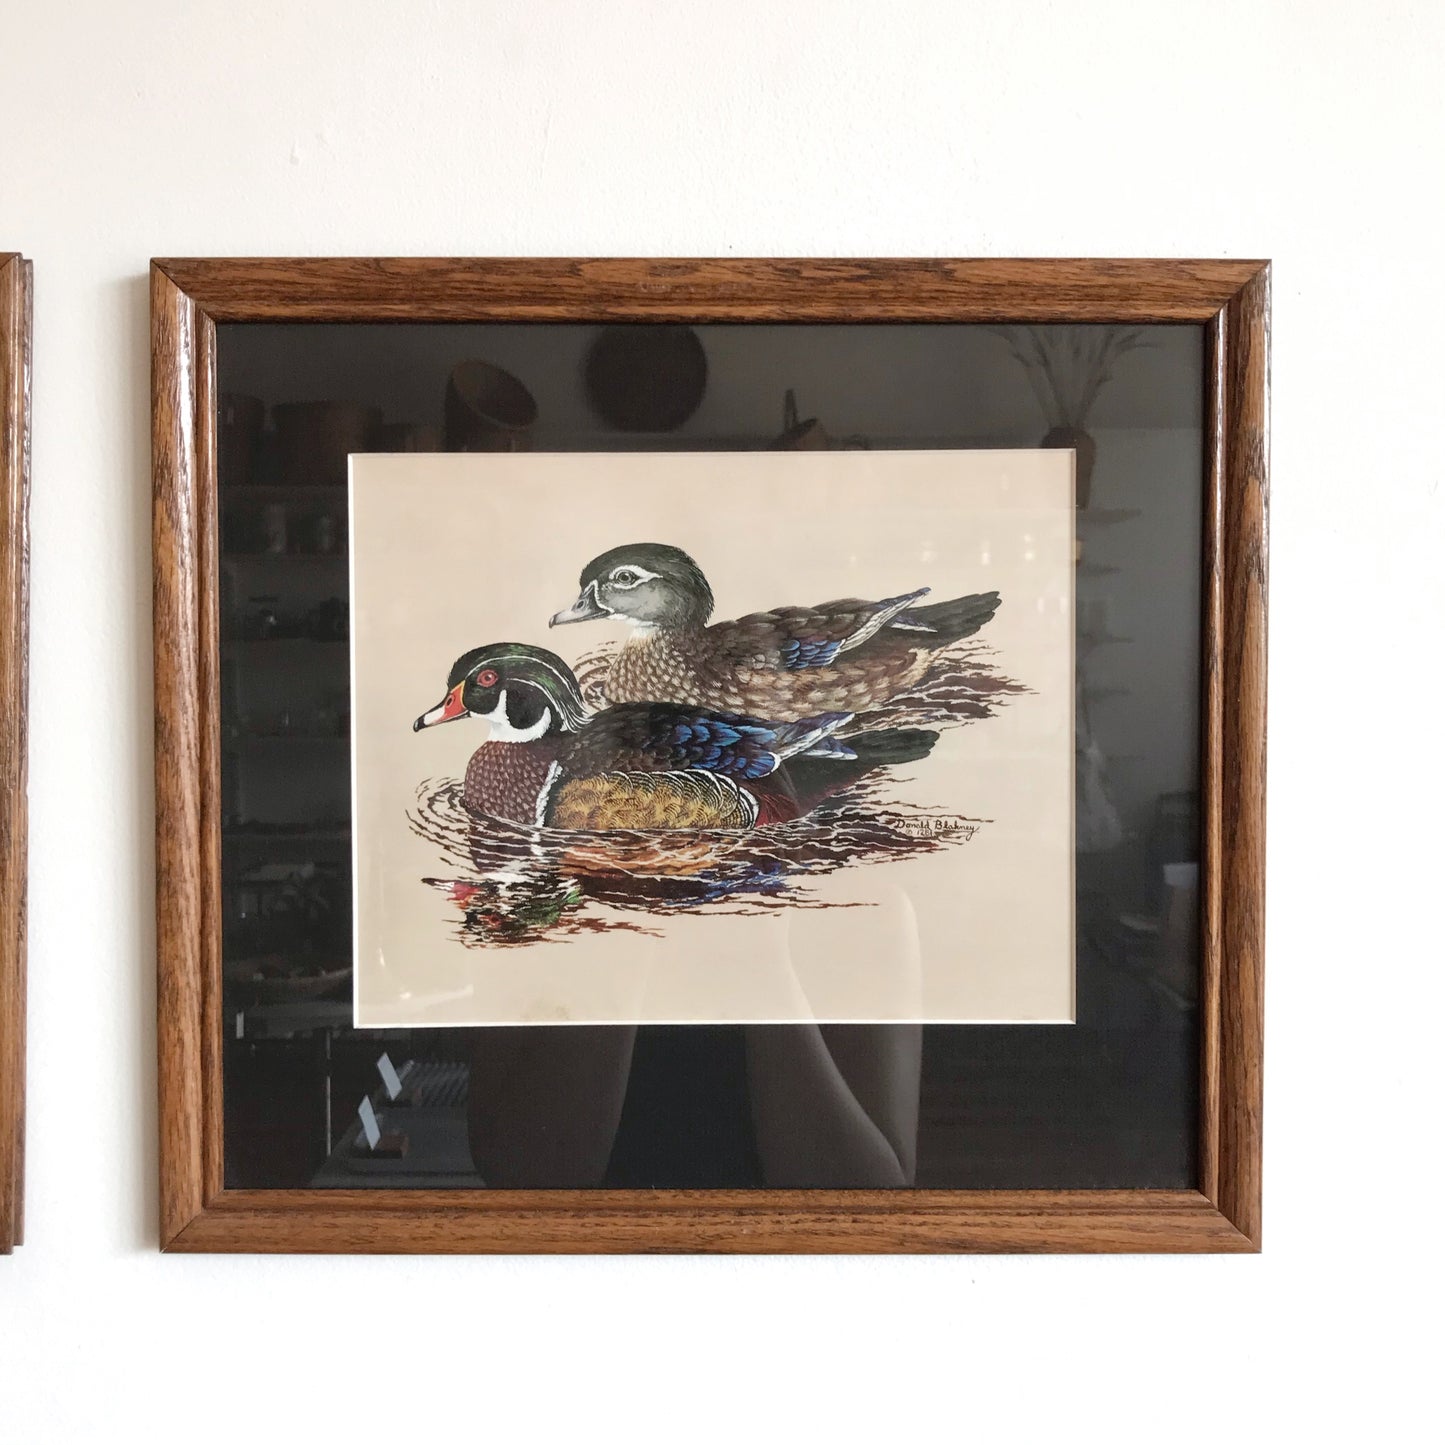 Pair of Vintage Framed Duck Prints